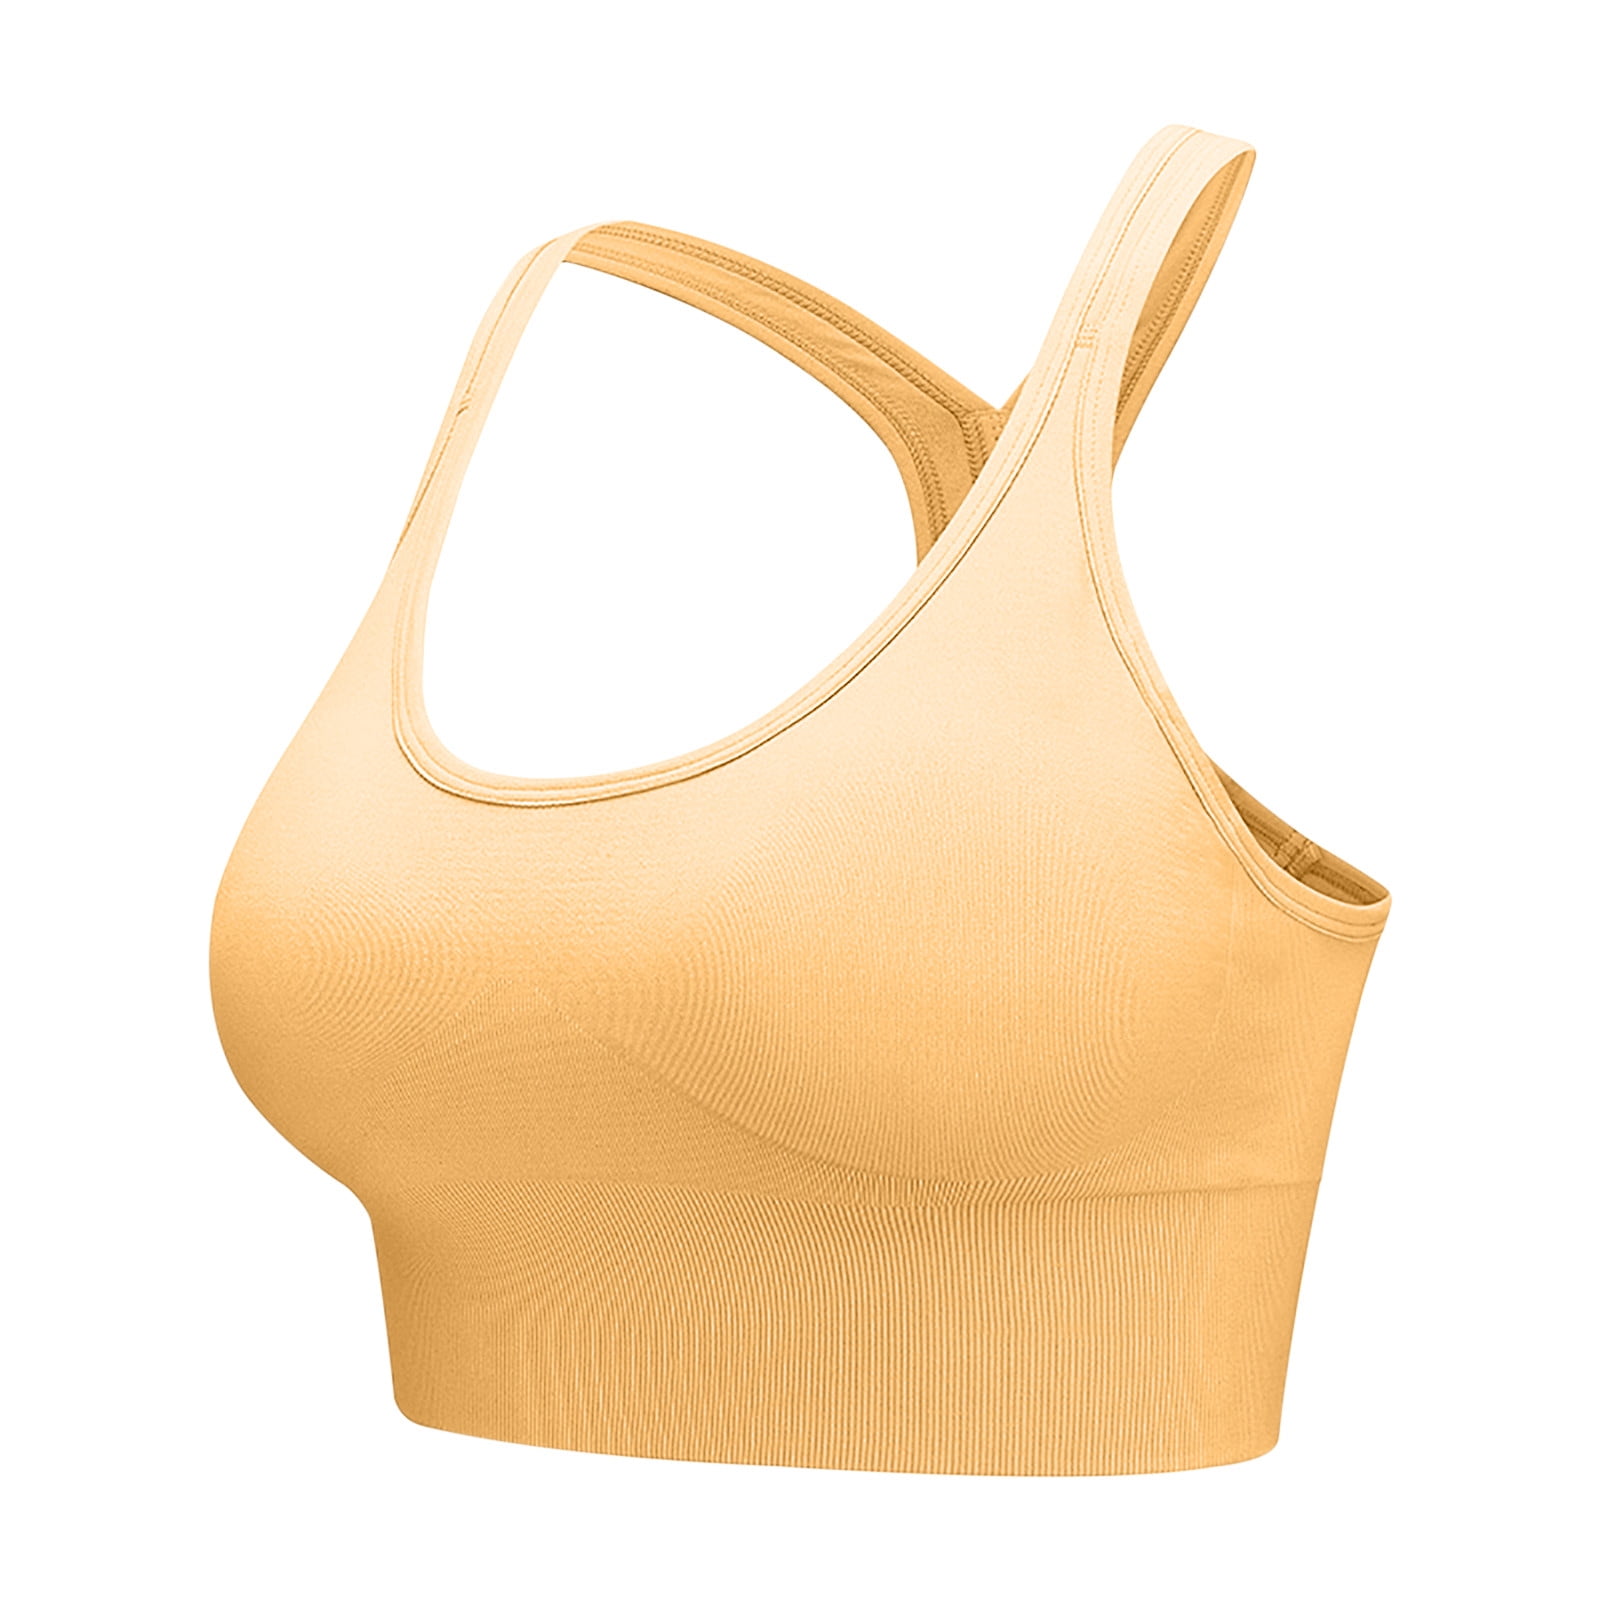 TOTGO Women's Bra T Shirt Bra Push Up Padded Bralette Bra Without Underwire  Seamless Comfortable Soft Sleeping Bra Yellow at  Women's Clothing  store